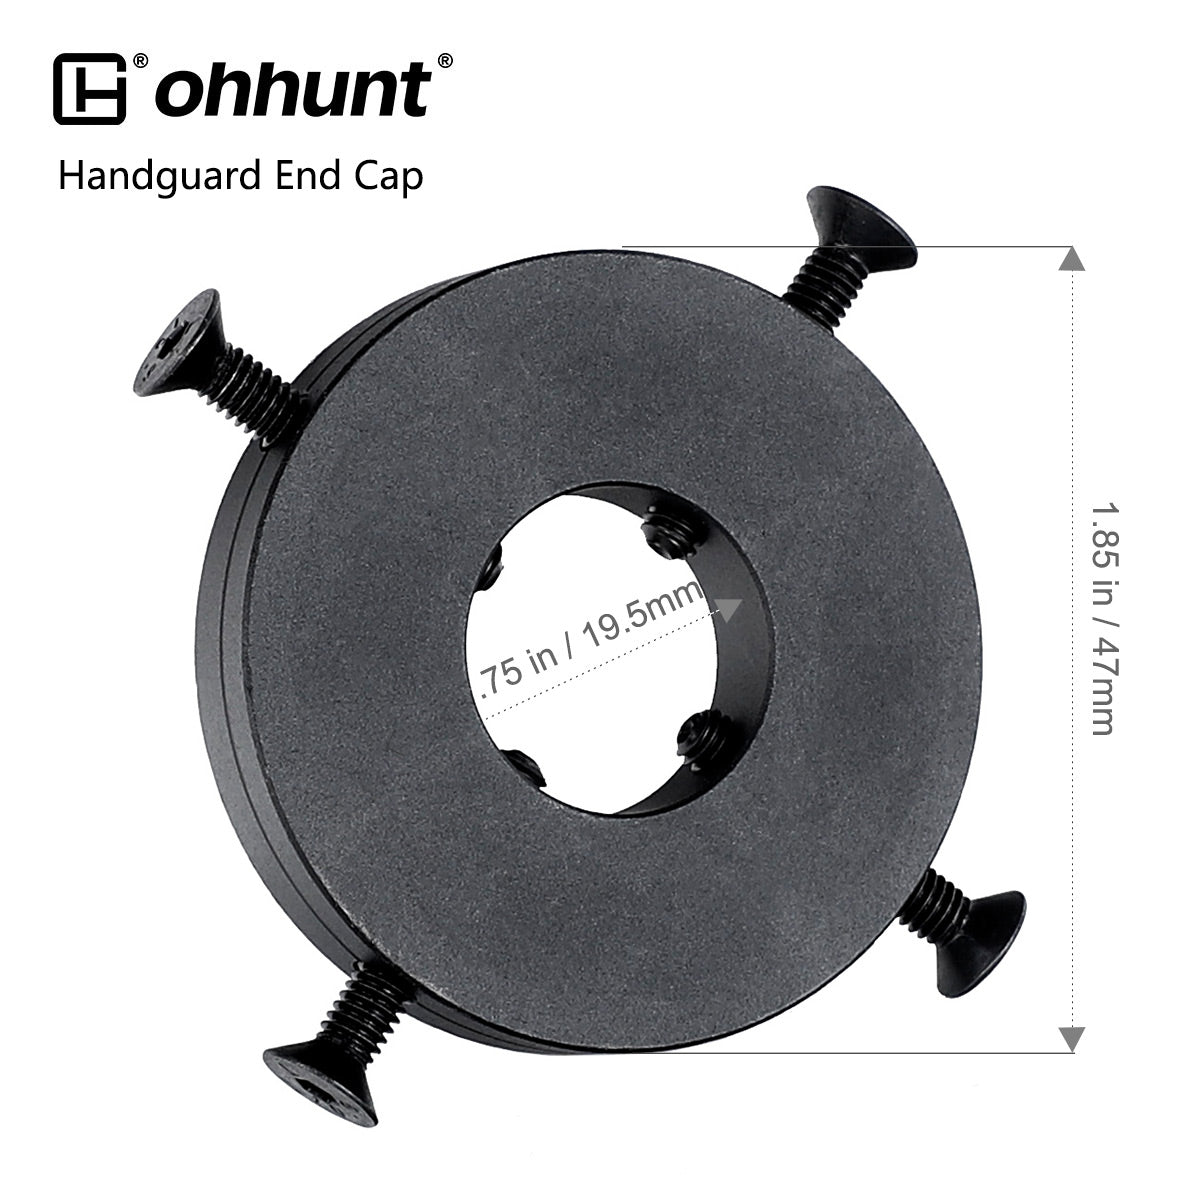 ohhunt® AR10 Free Float Handguard End Cap .750 inch Inner Diameter